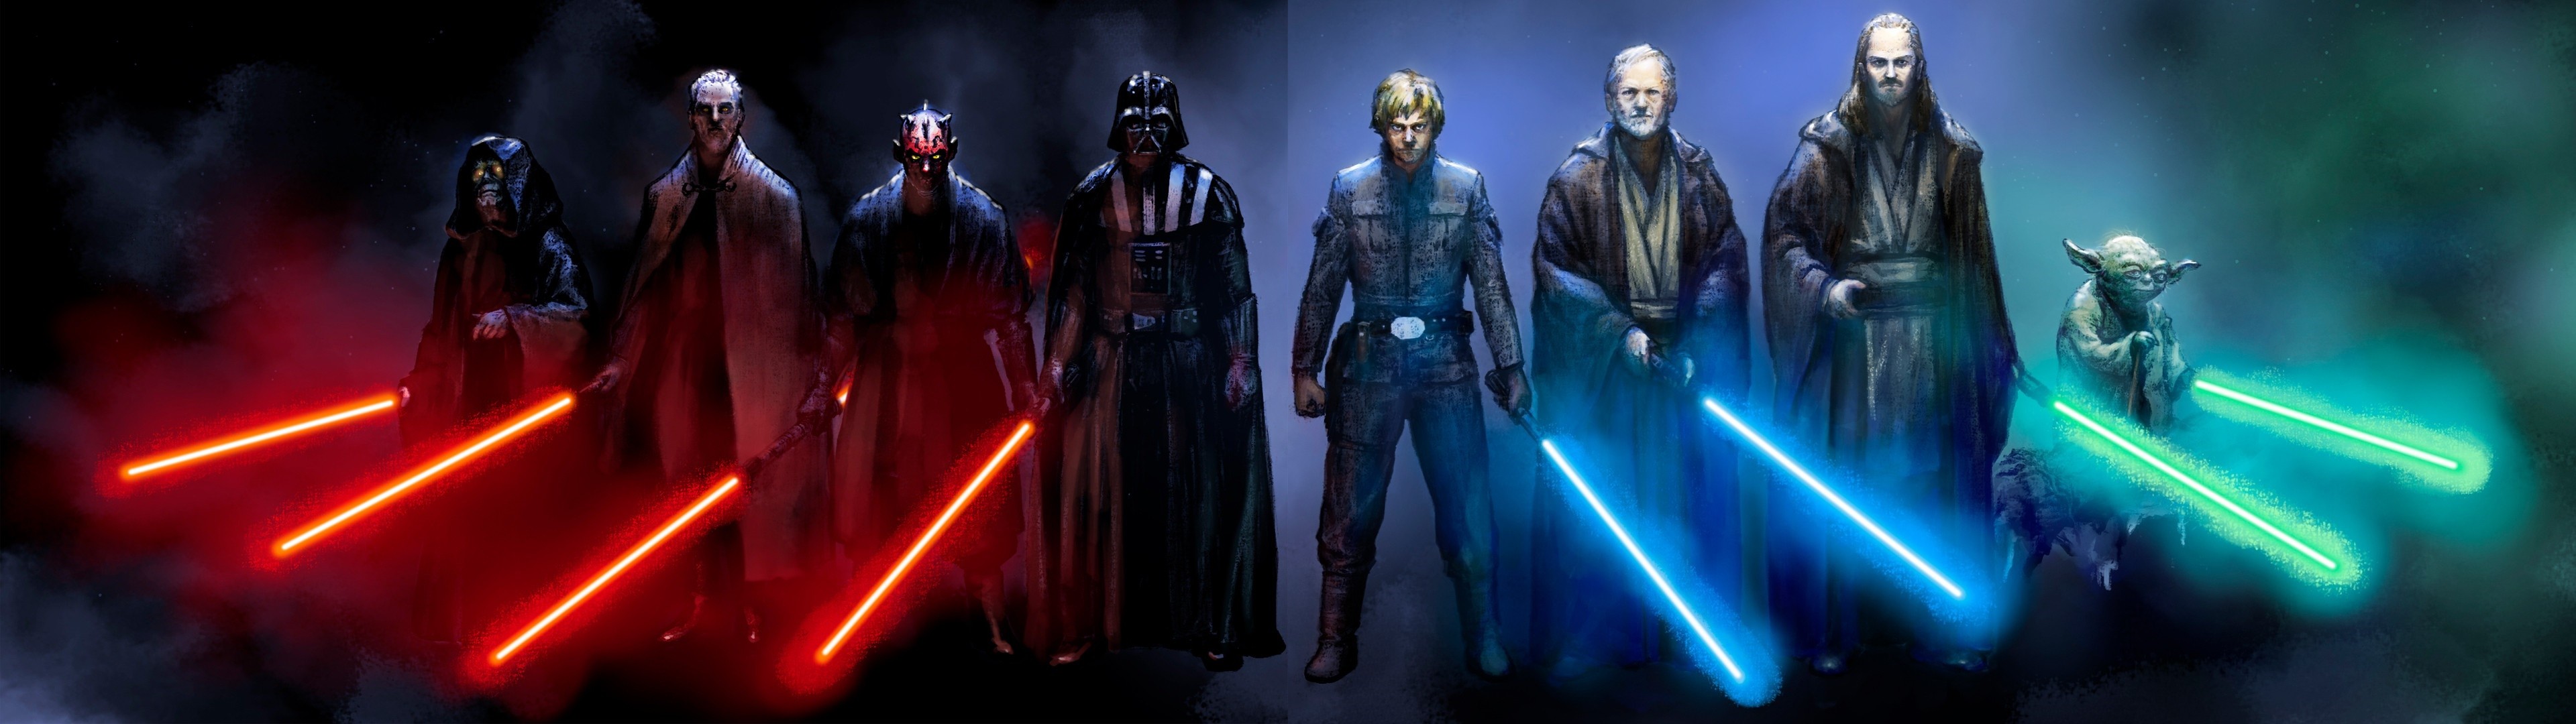 Star Wars Sith Lords - HD Wallpaper 